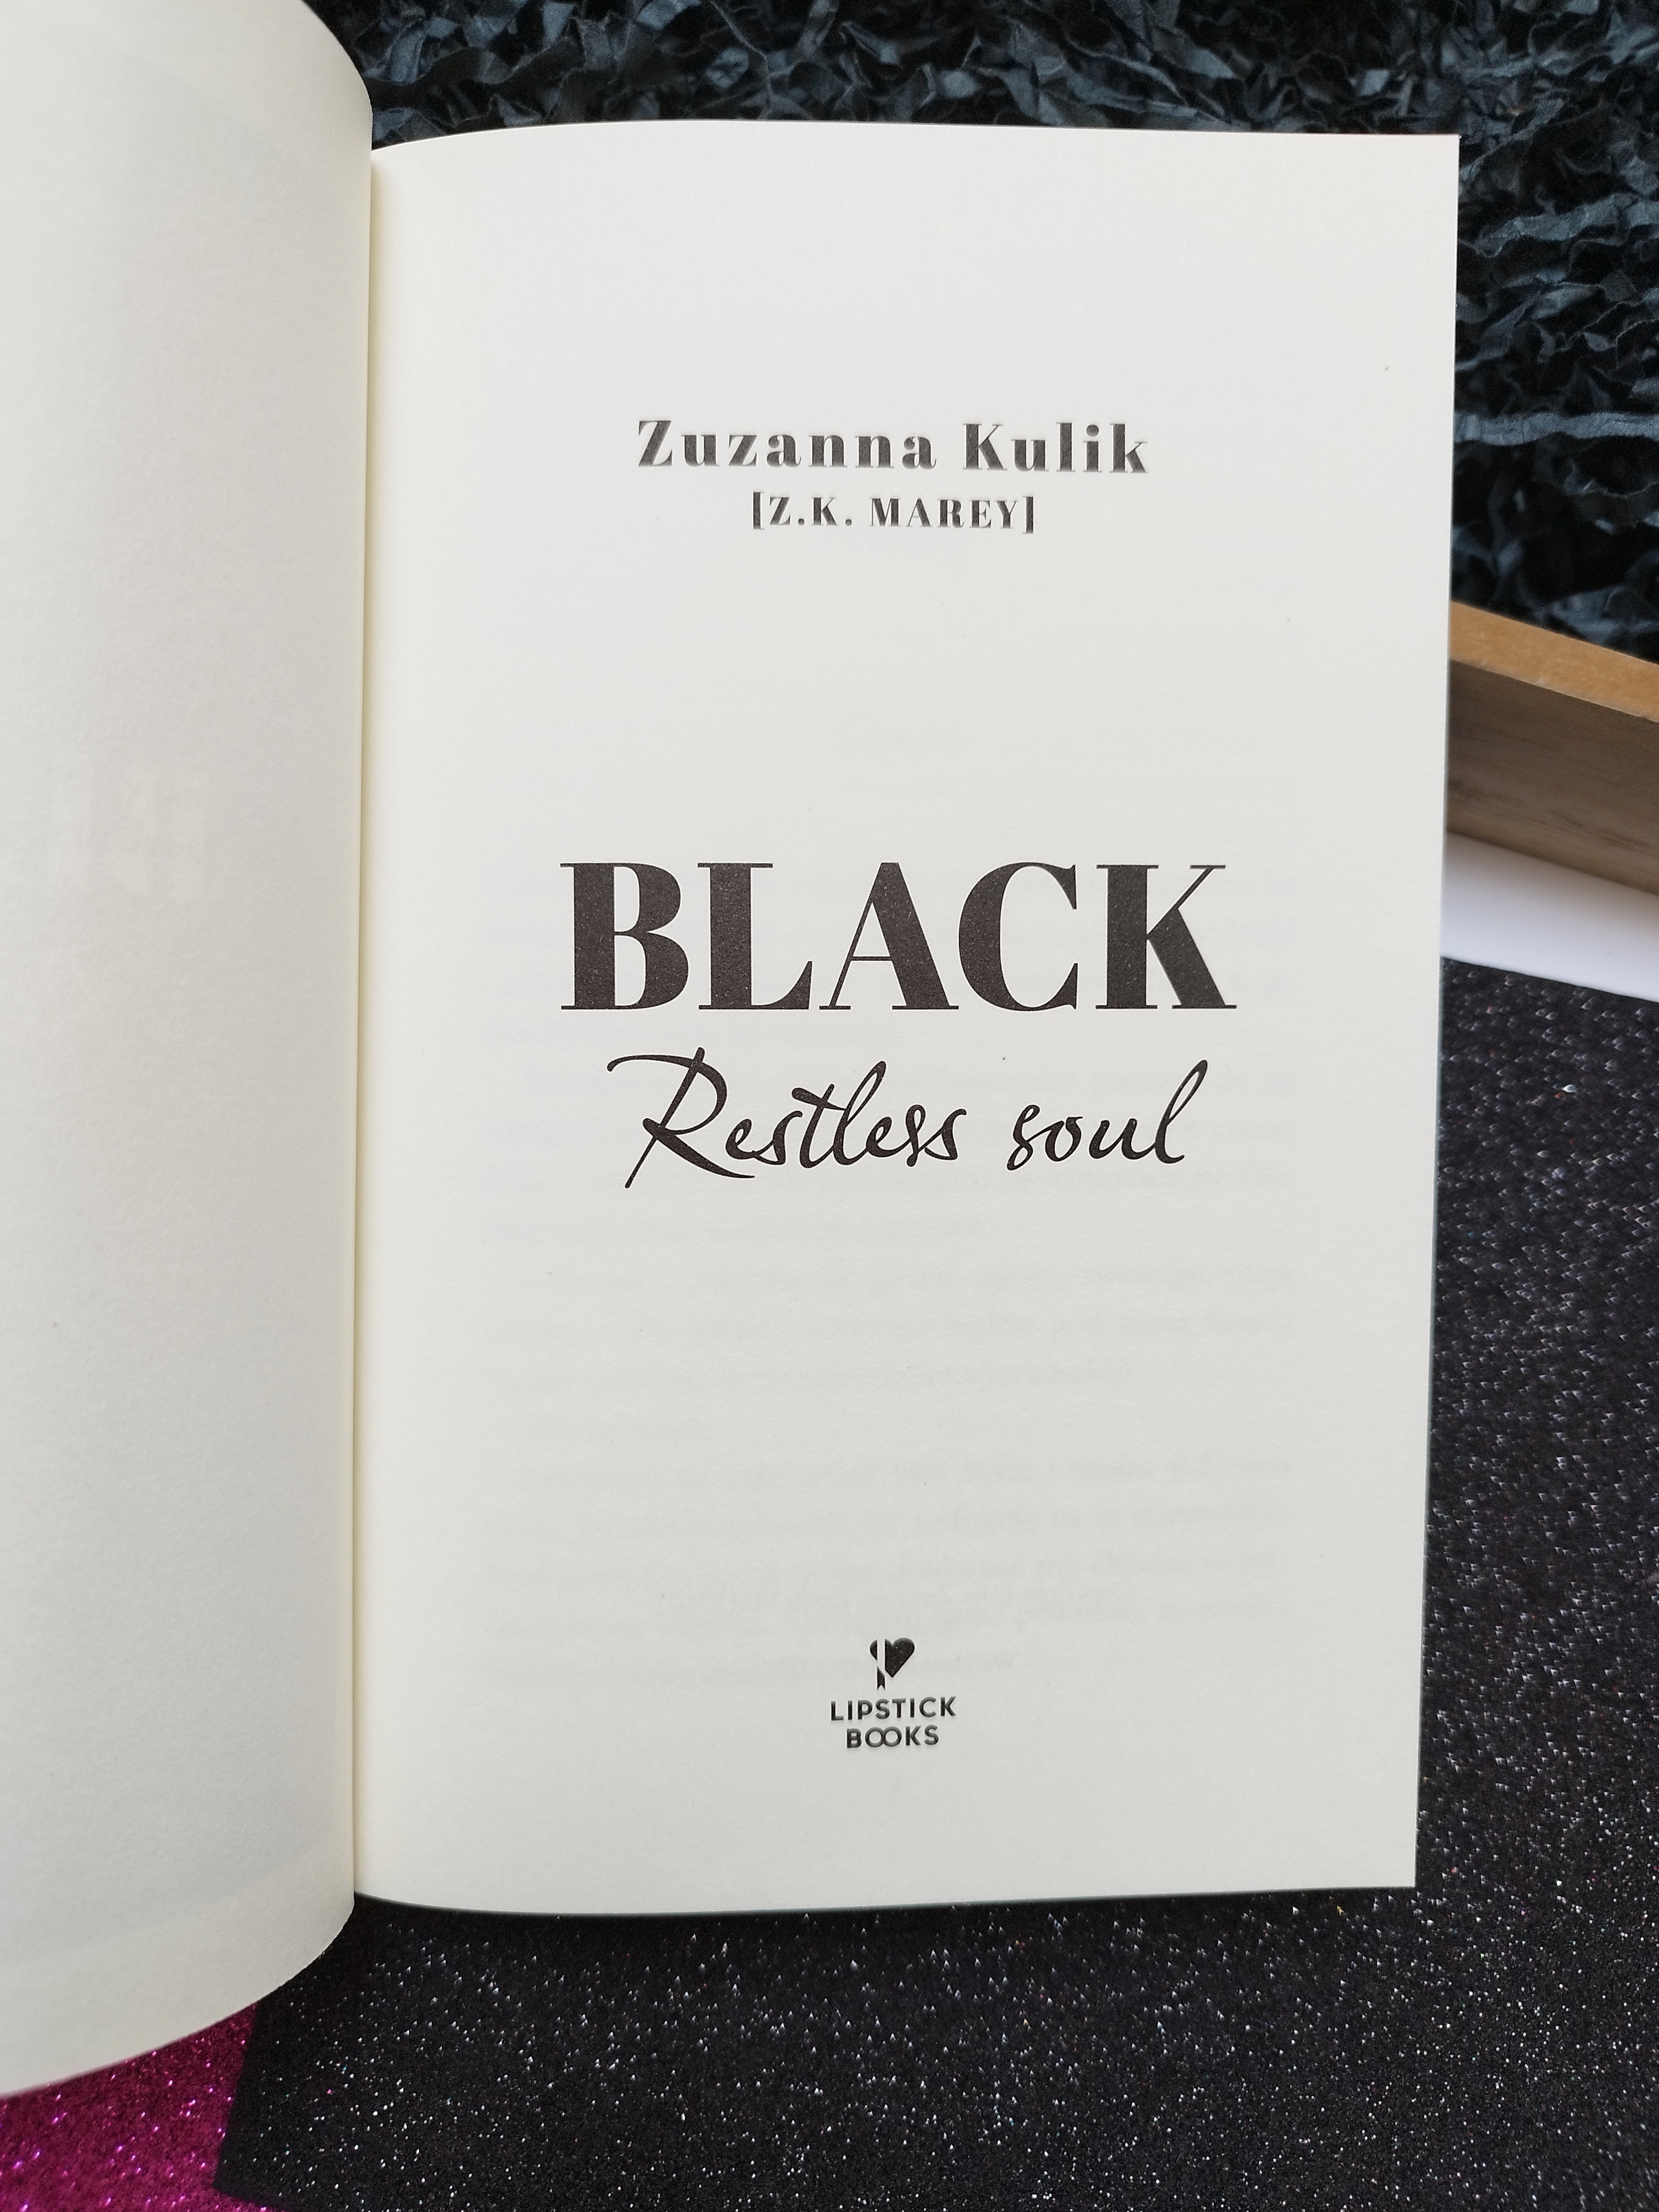 "Black Restless soul" Zuzanna Kulik - recenzja